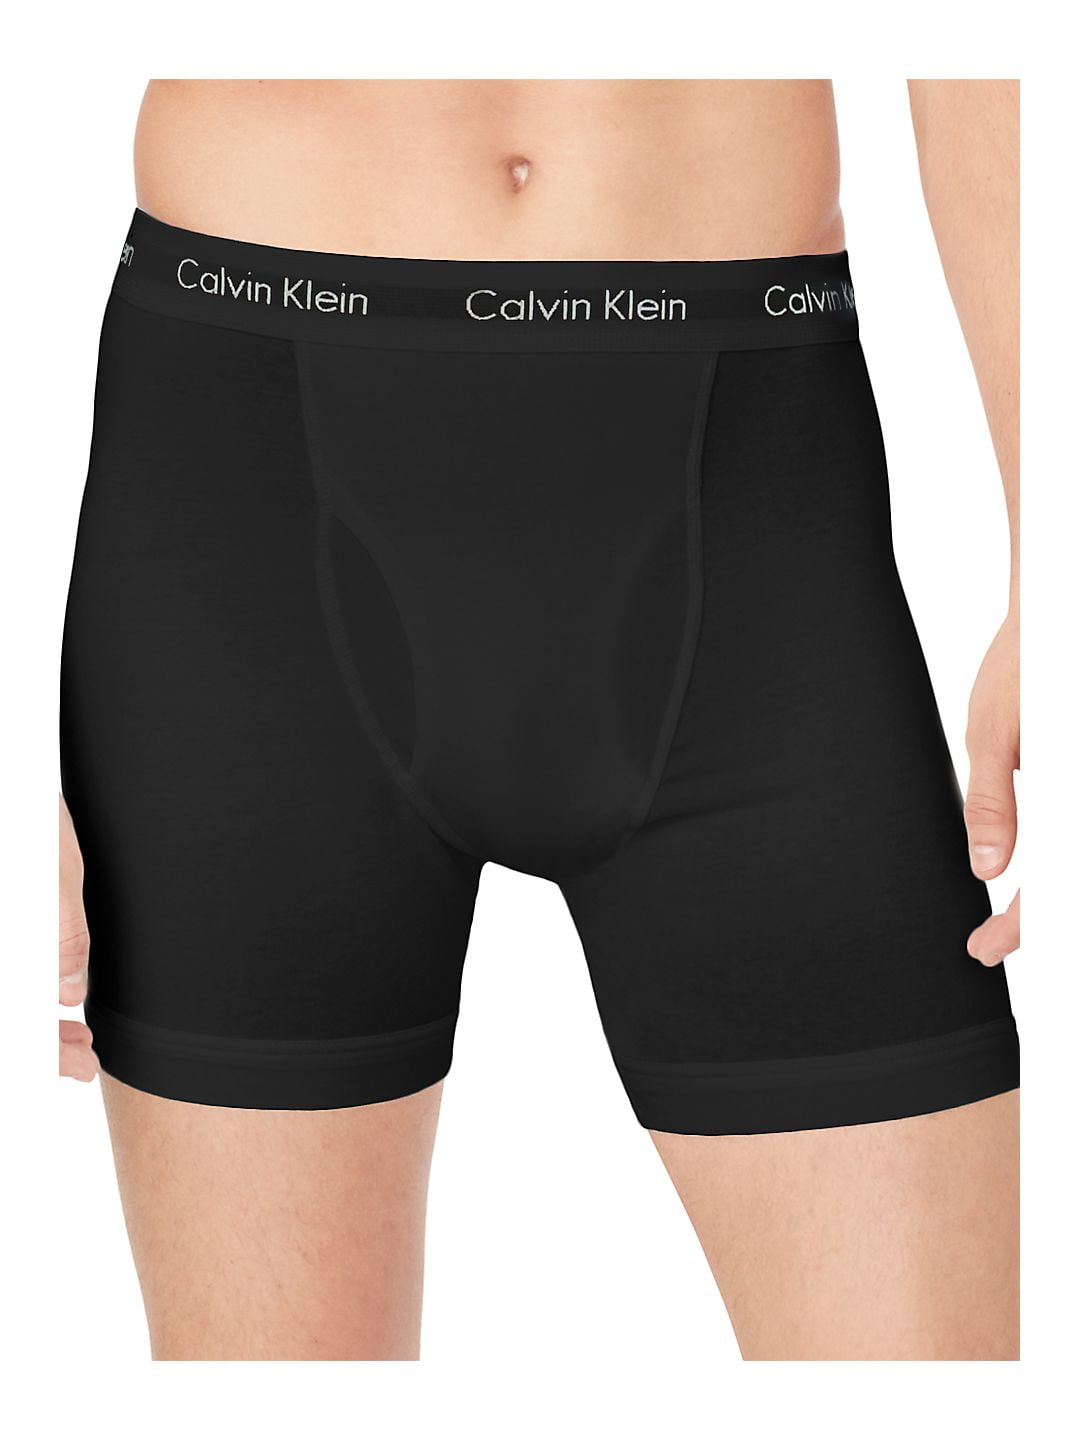 Calvin Klein Men's Cotton Stretch Multipack Boxer Briefs,, Black, Size  Medium 